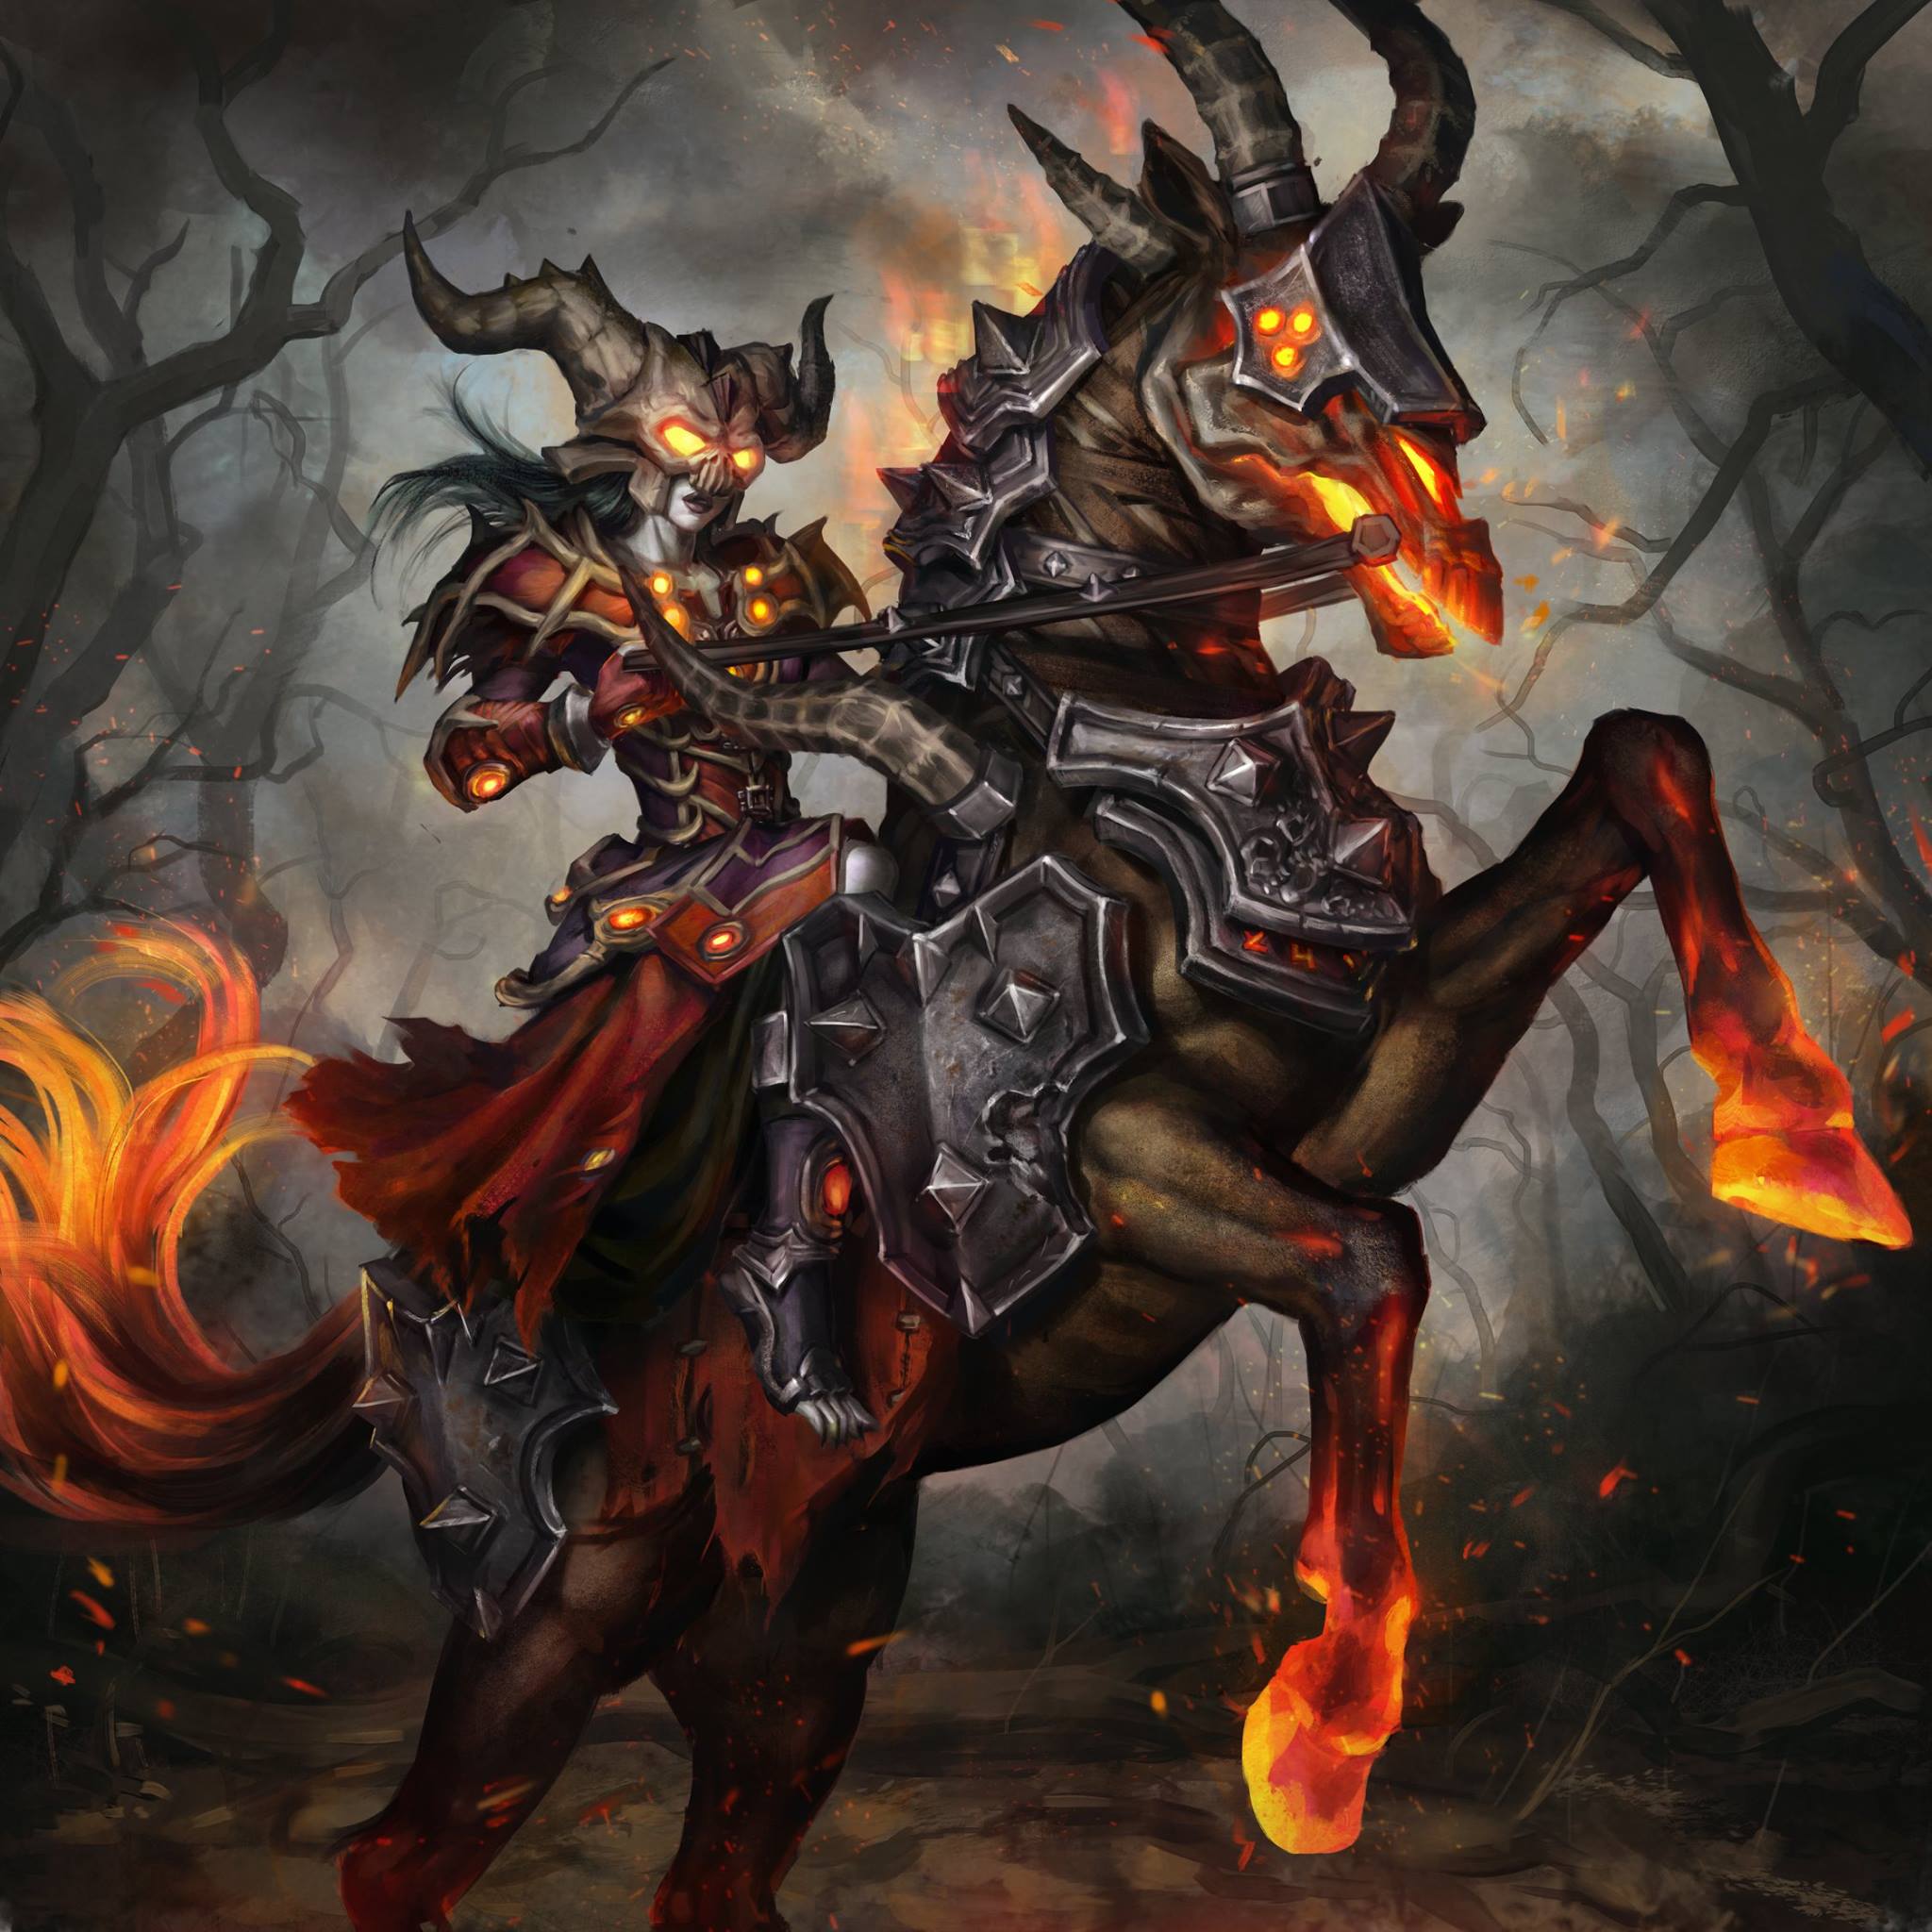 General 2048x2048 World of Warcraft undead Warlock horse fire World of Warcraft: Legion PC gaming glowing eyes fantasy art video game art